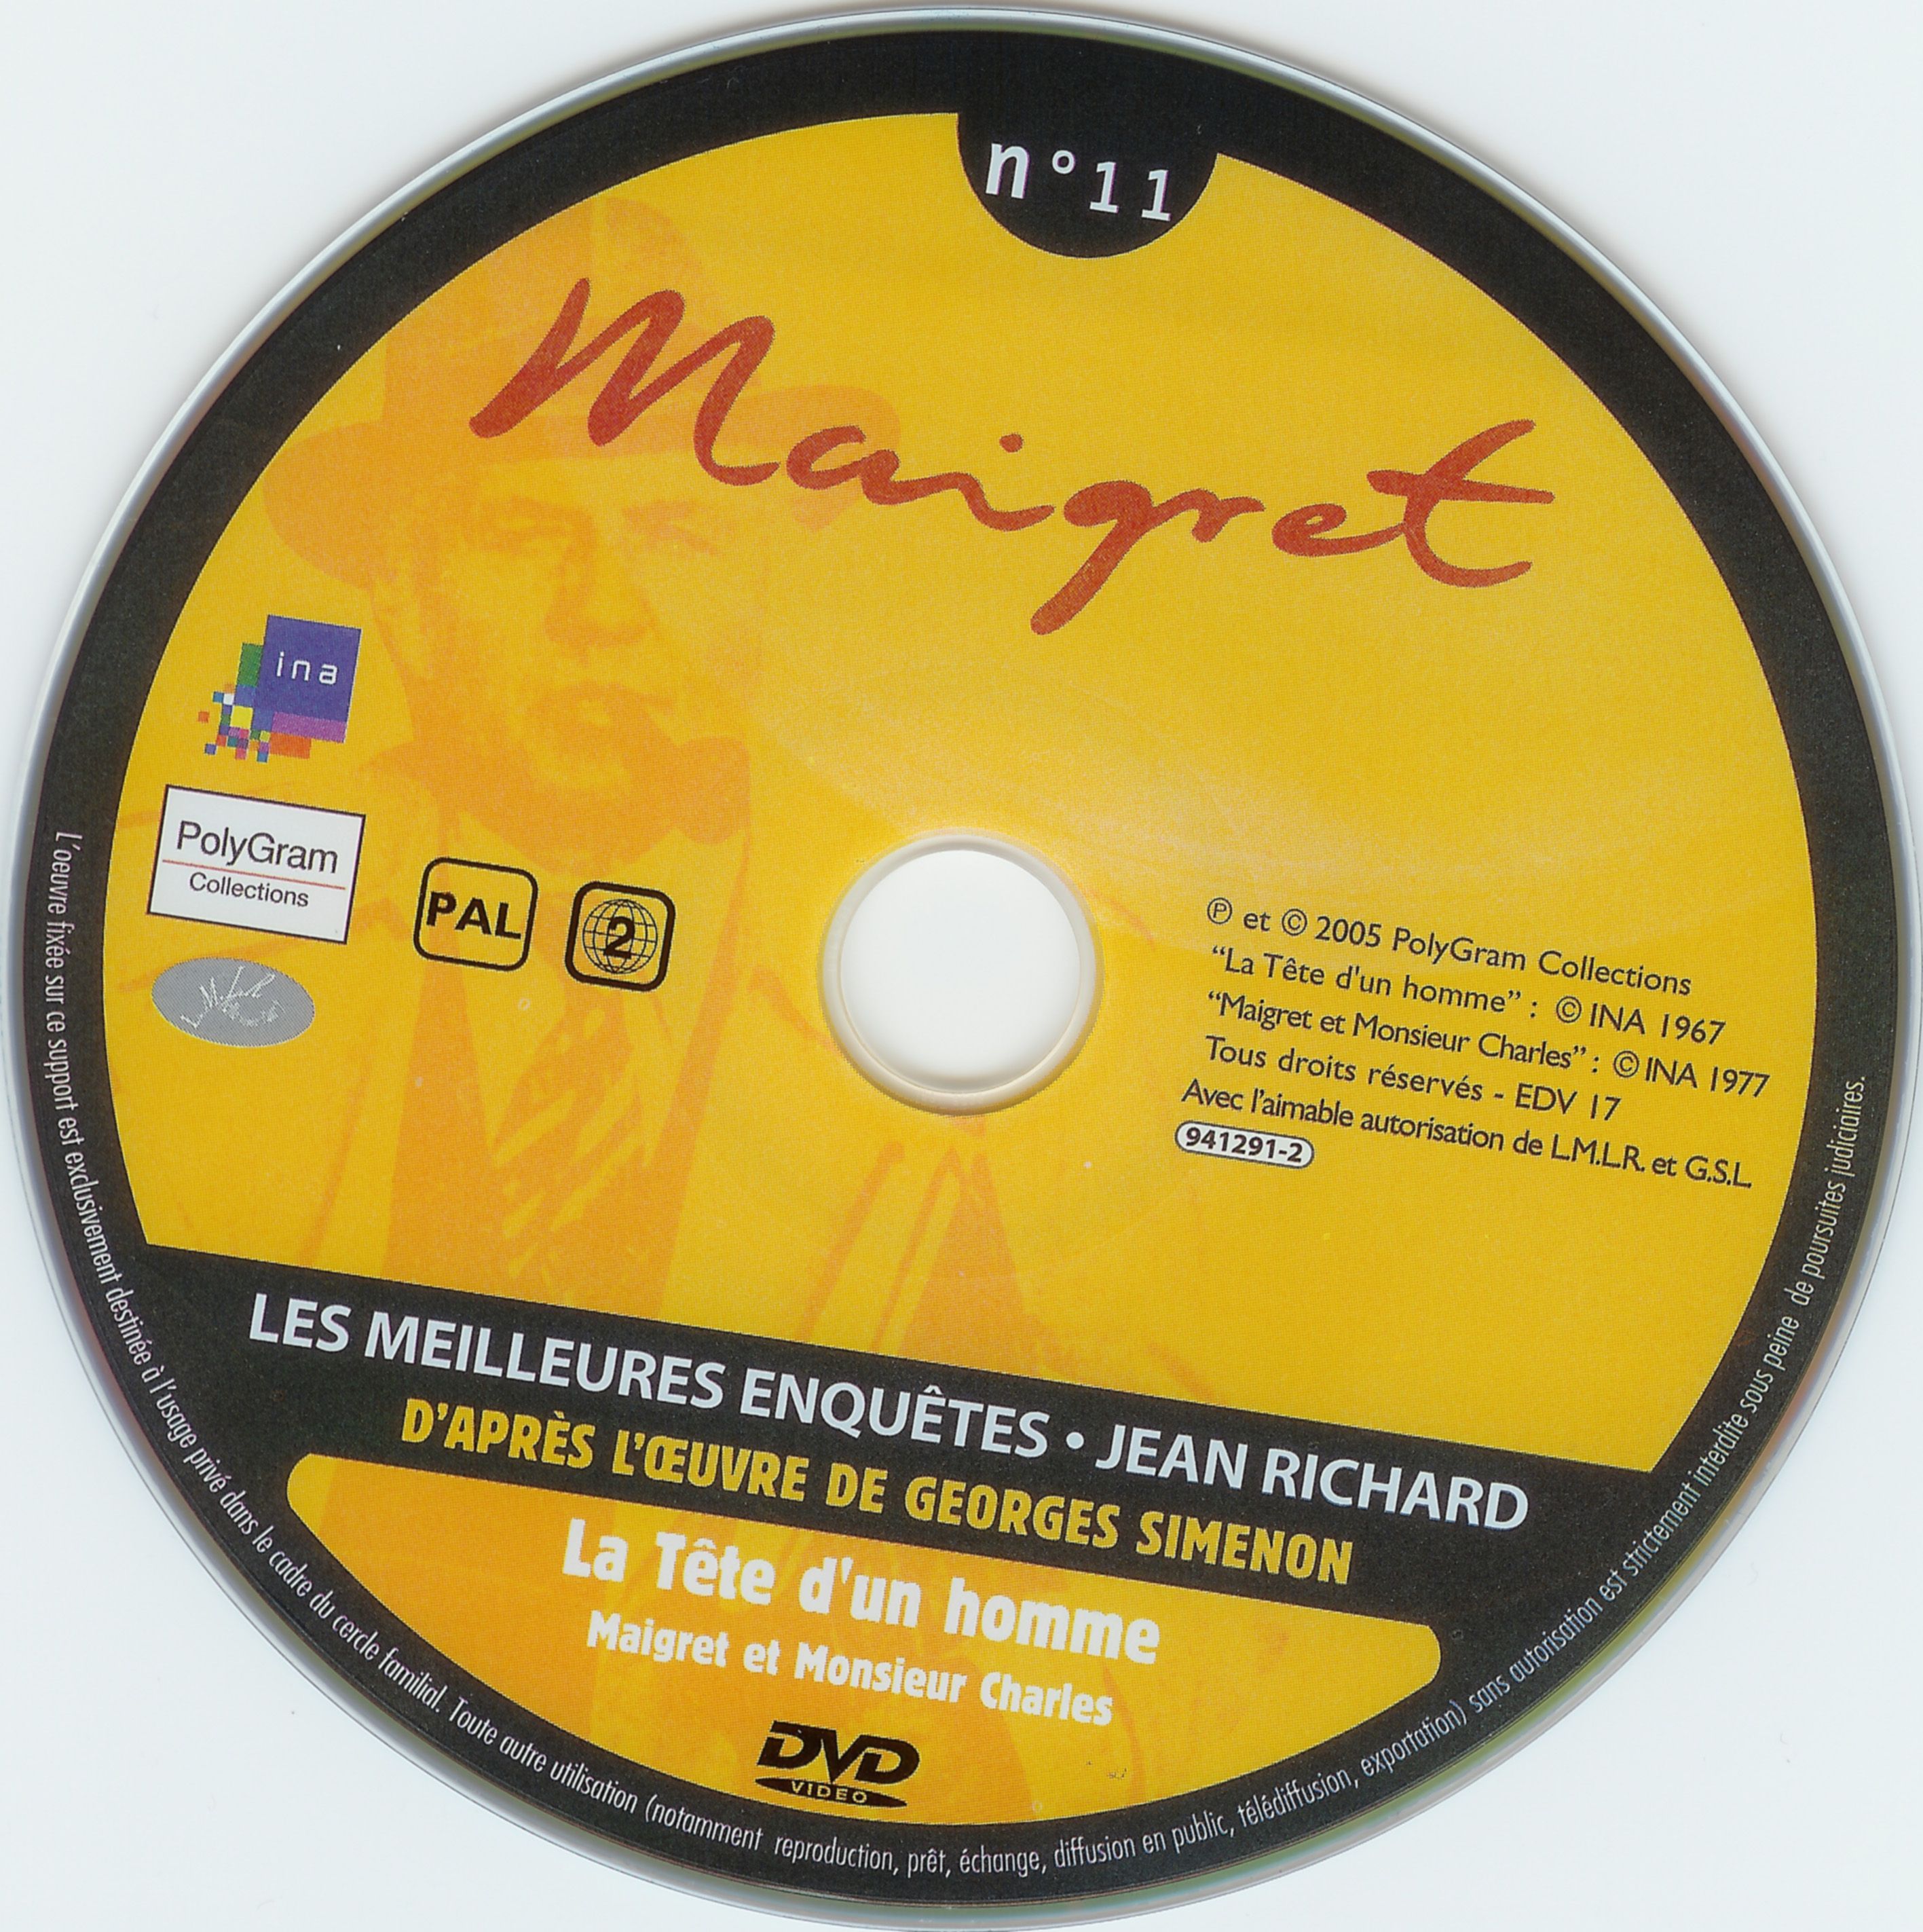 Maigret (Jean Richard) vol 11